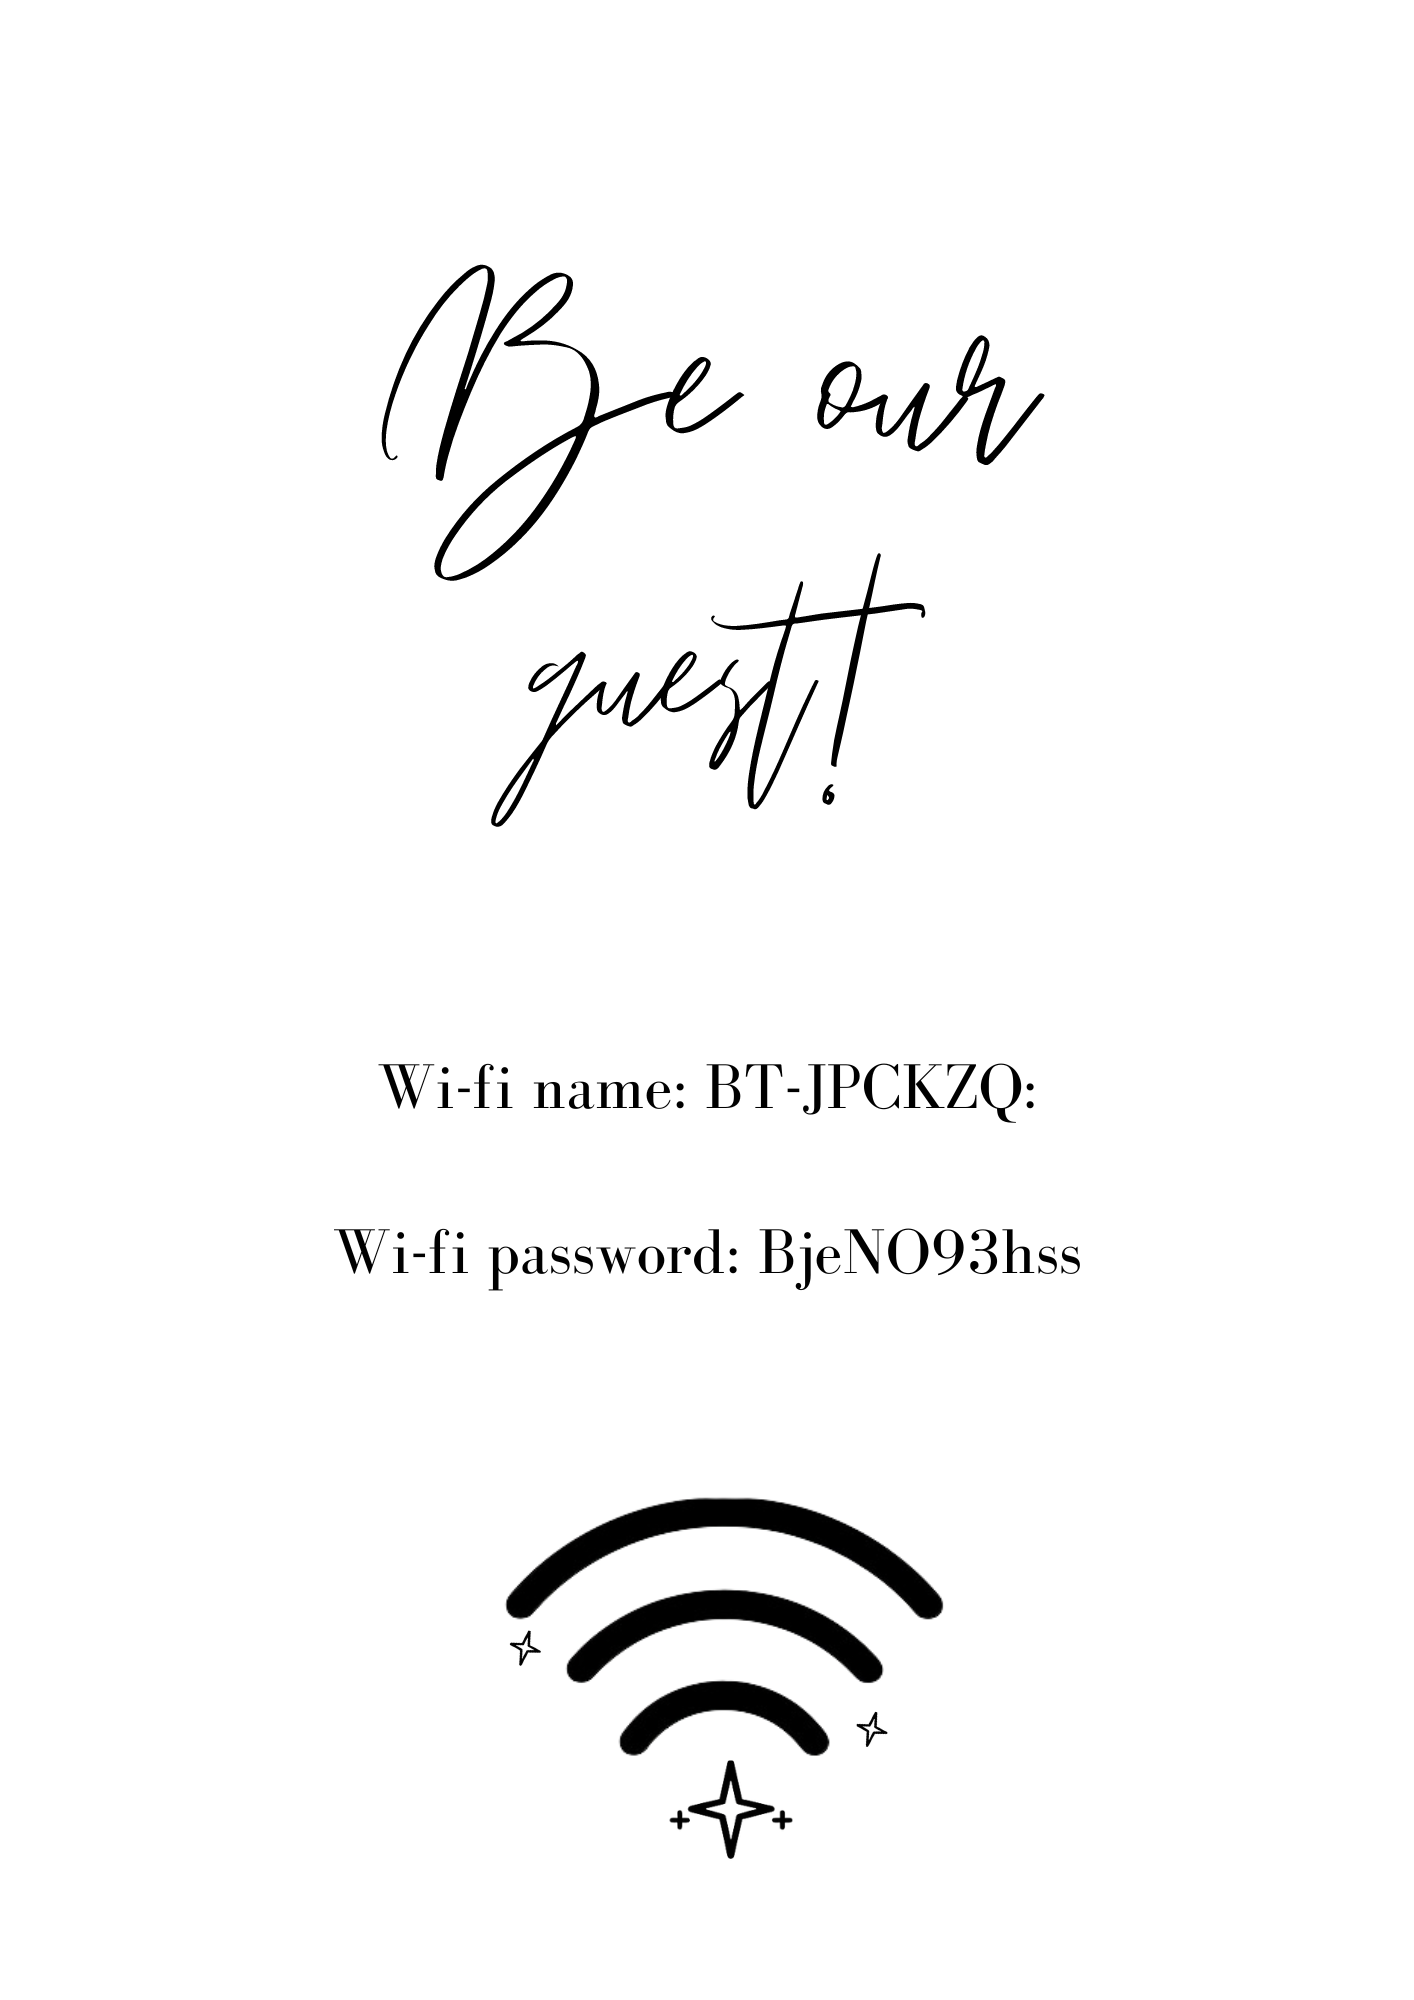 Customisable wifi password print